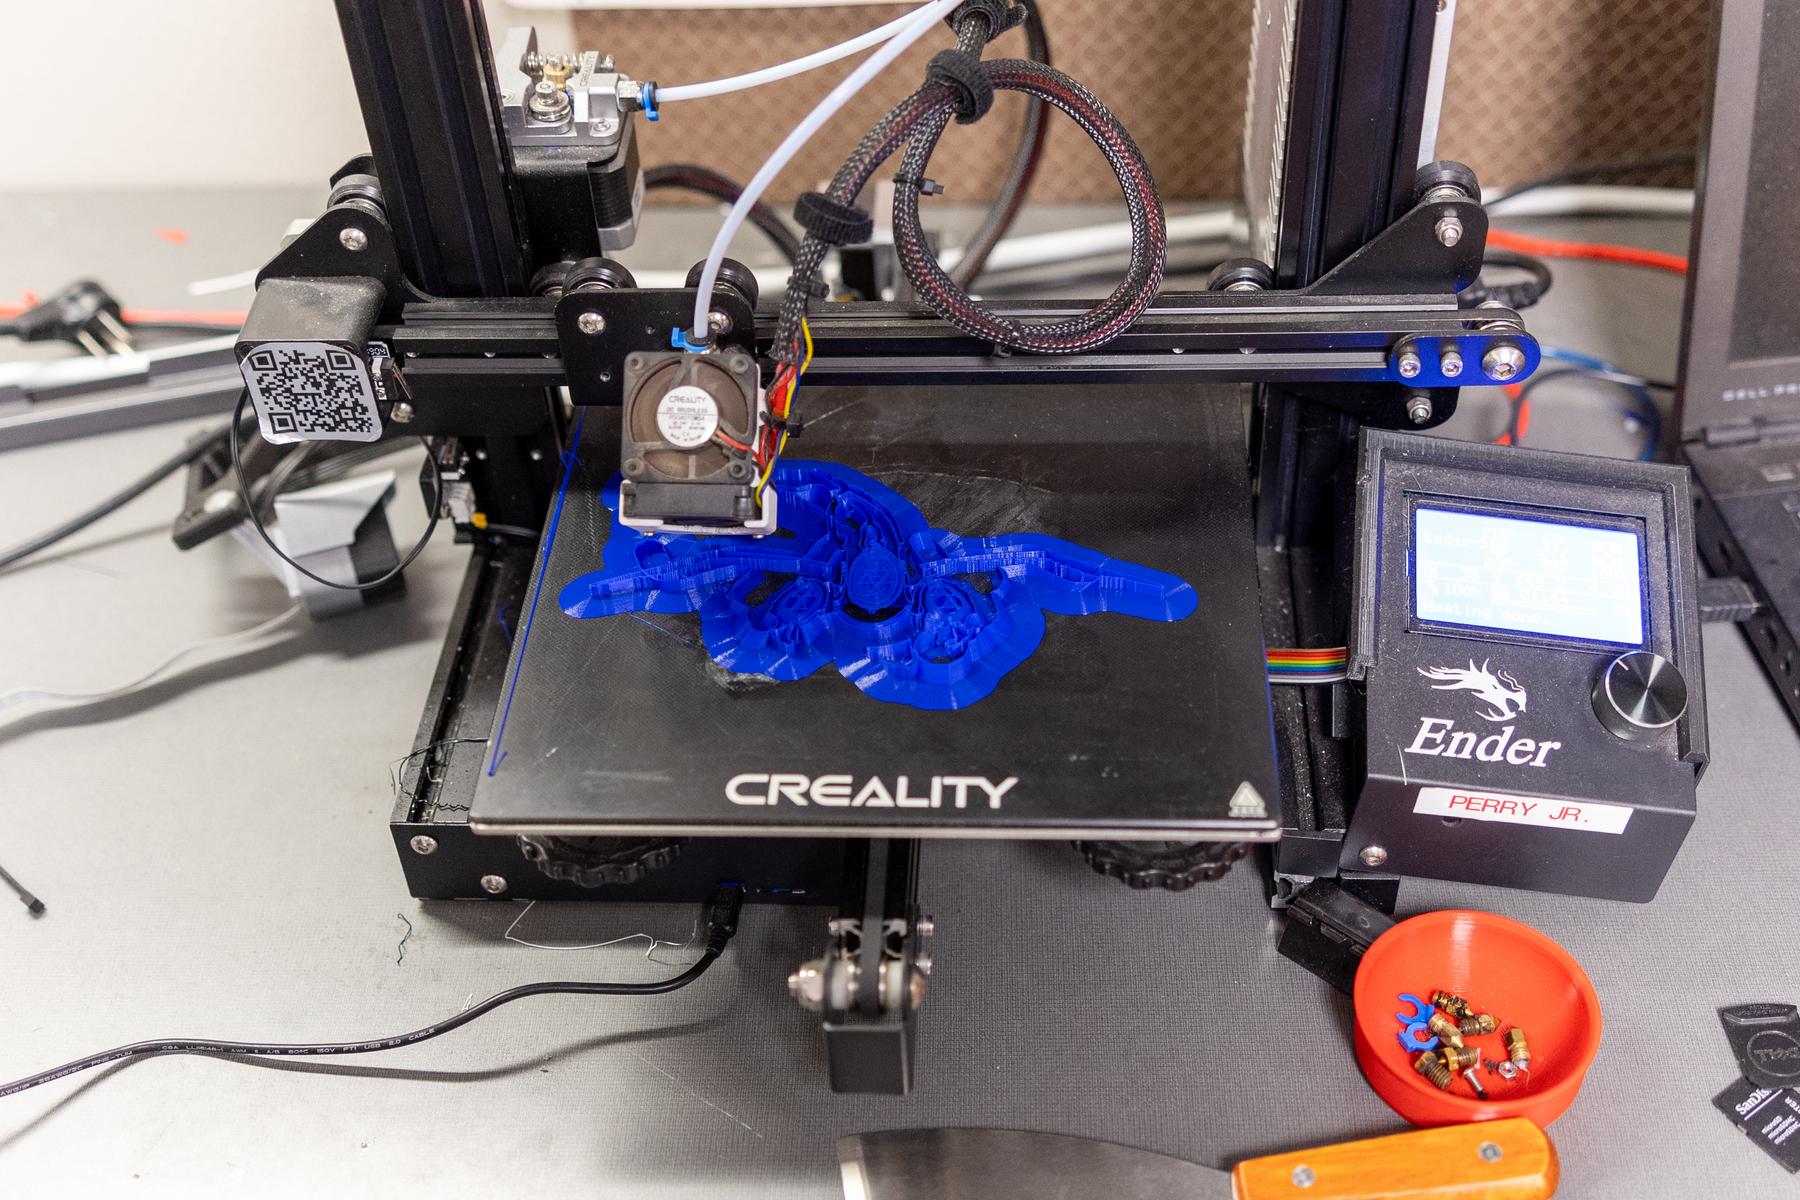 A Creality 3D printer is among the technology at APSU's GIS Center.